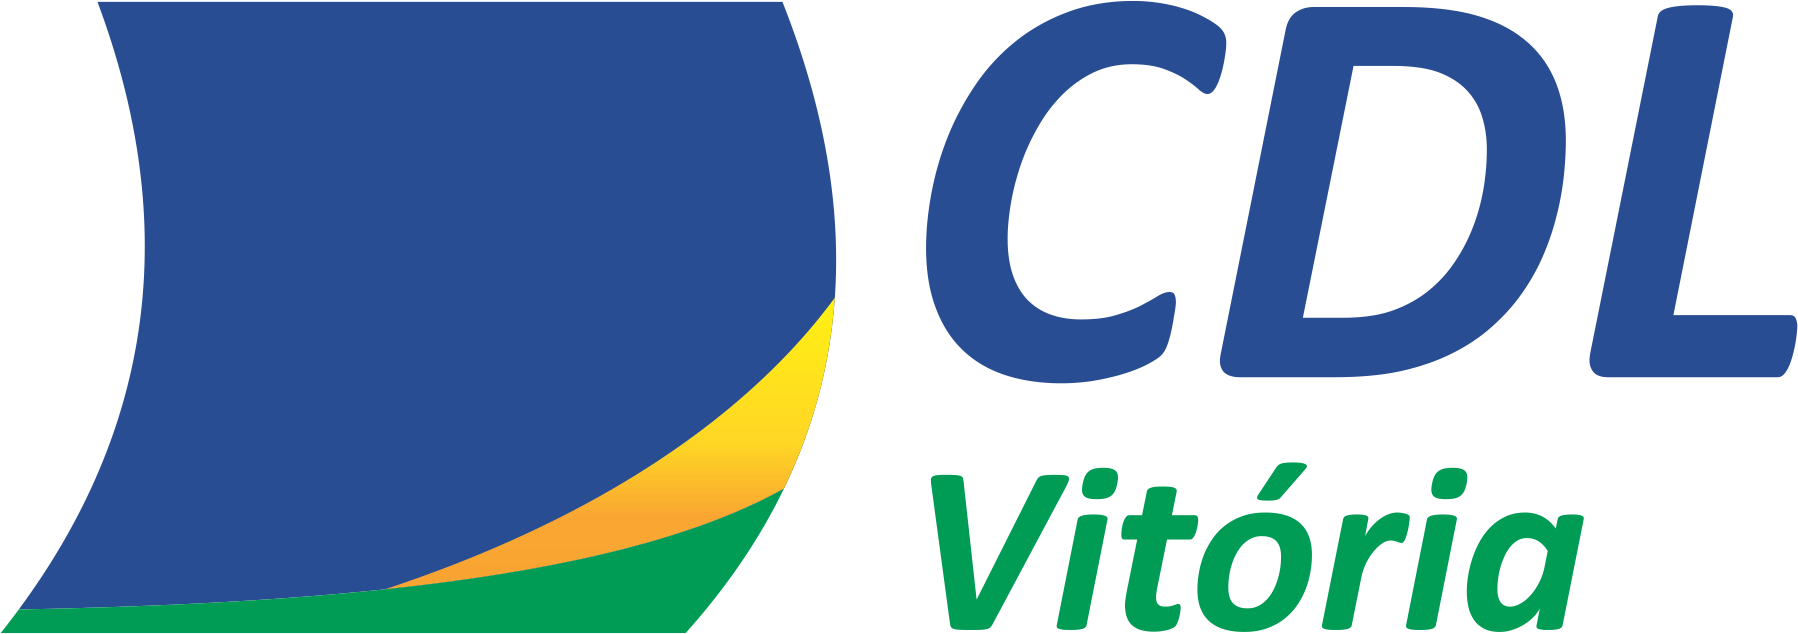 Logo-CDL-Vitoria